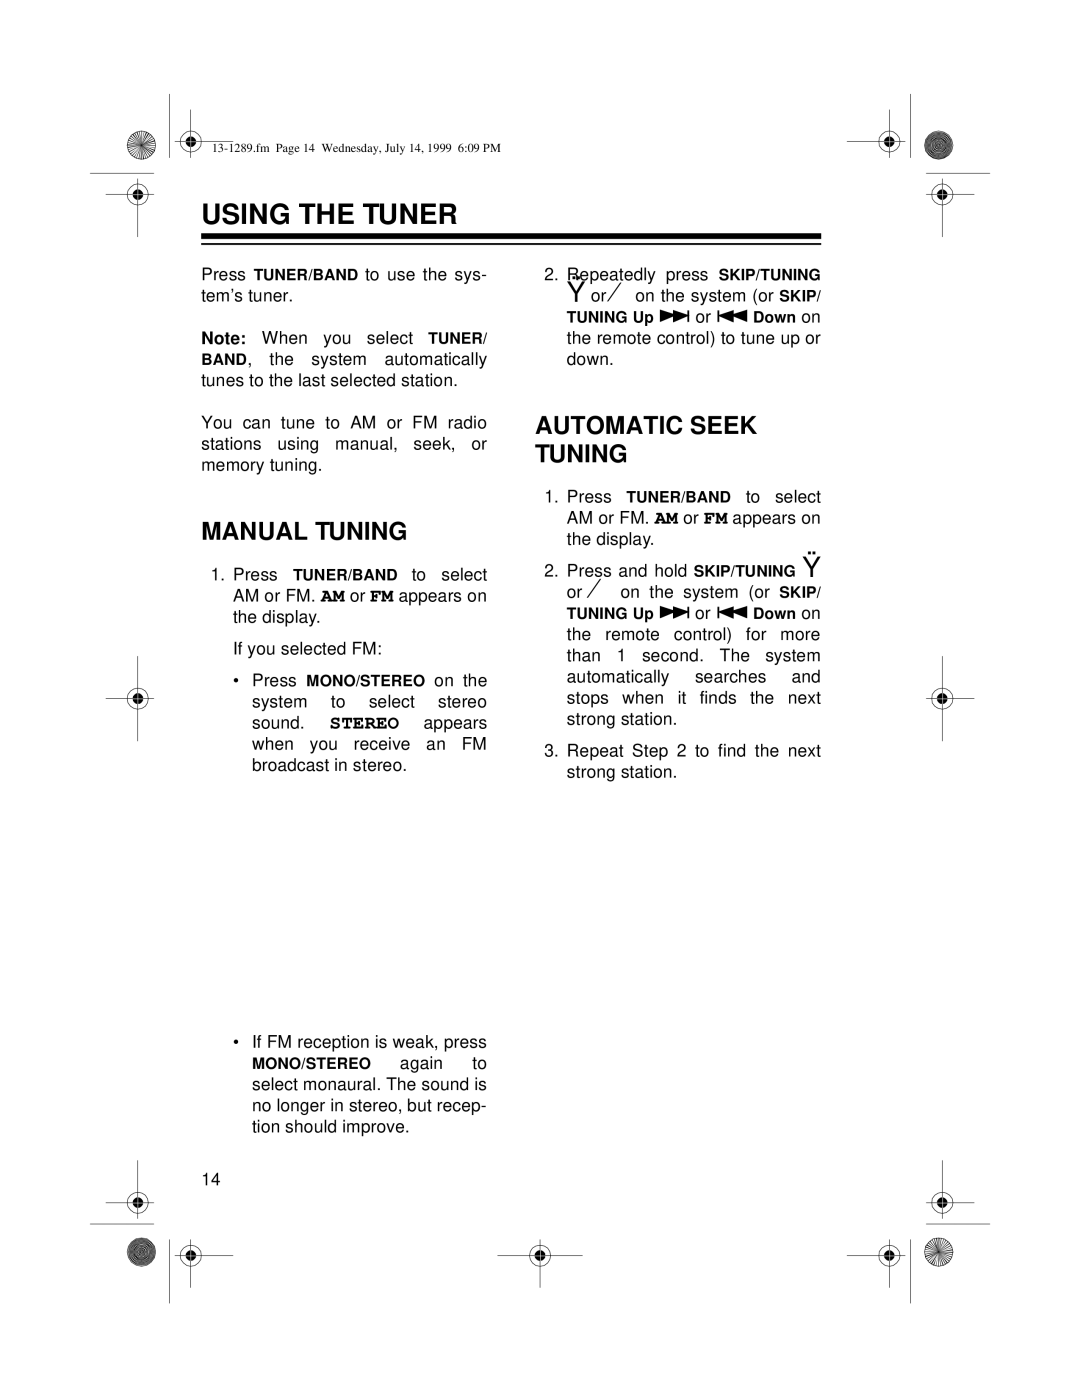 Optimus 742 owner manual Using The Tuner, Manual Tuning, Automatic Seek Tuning 